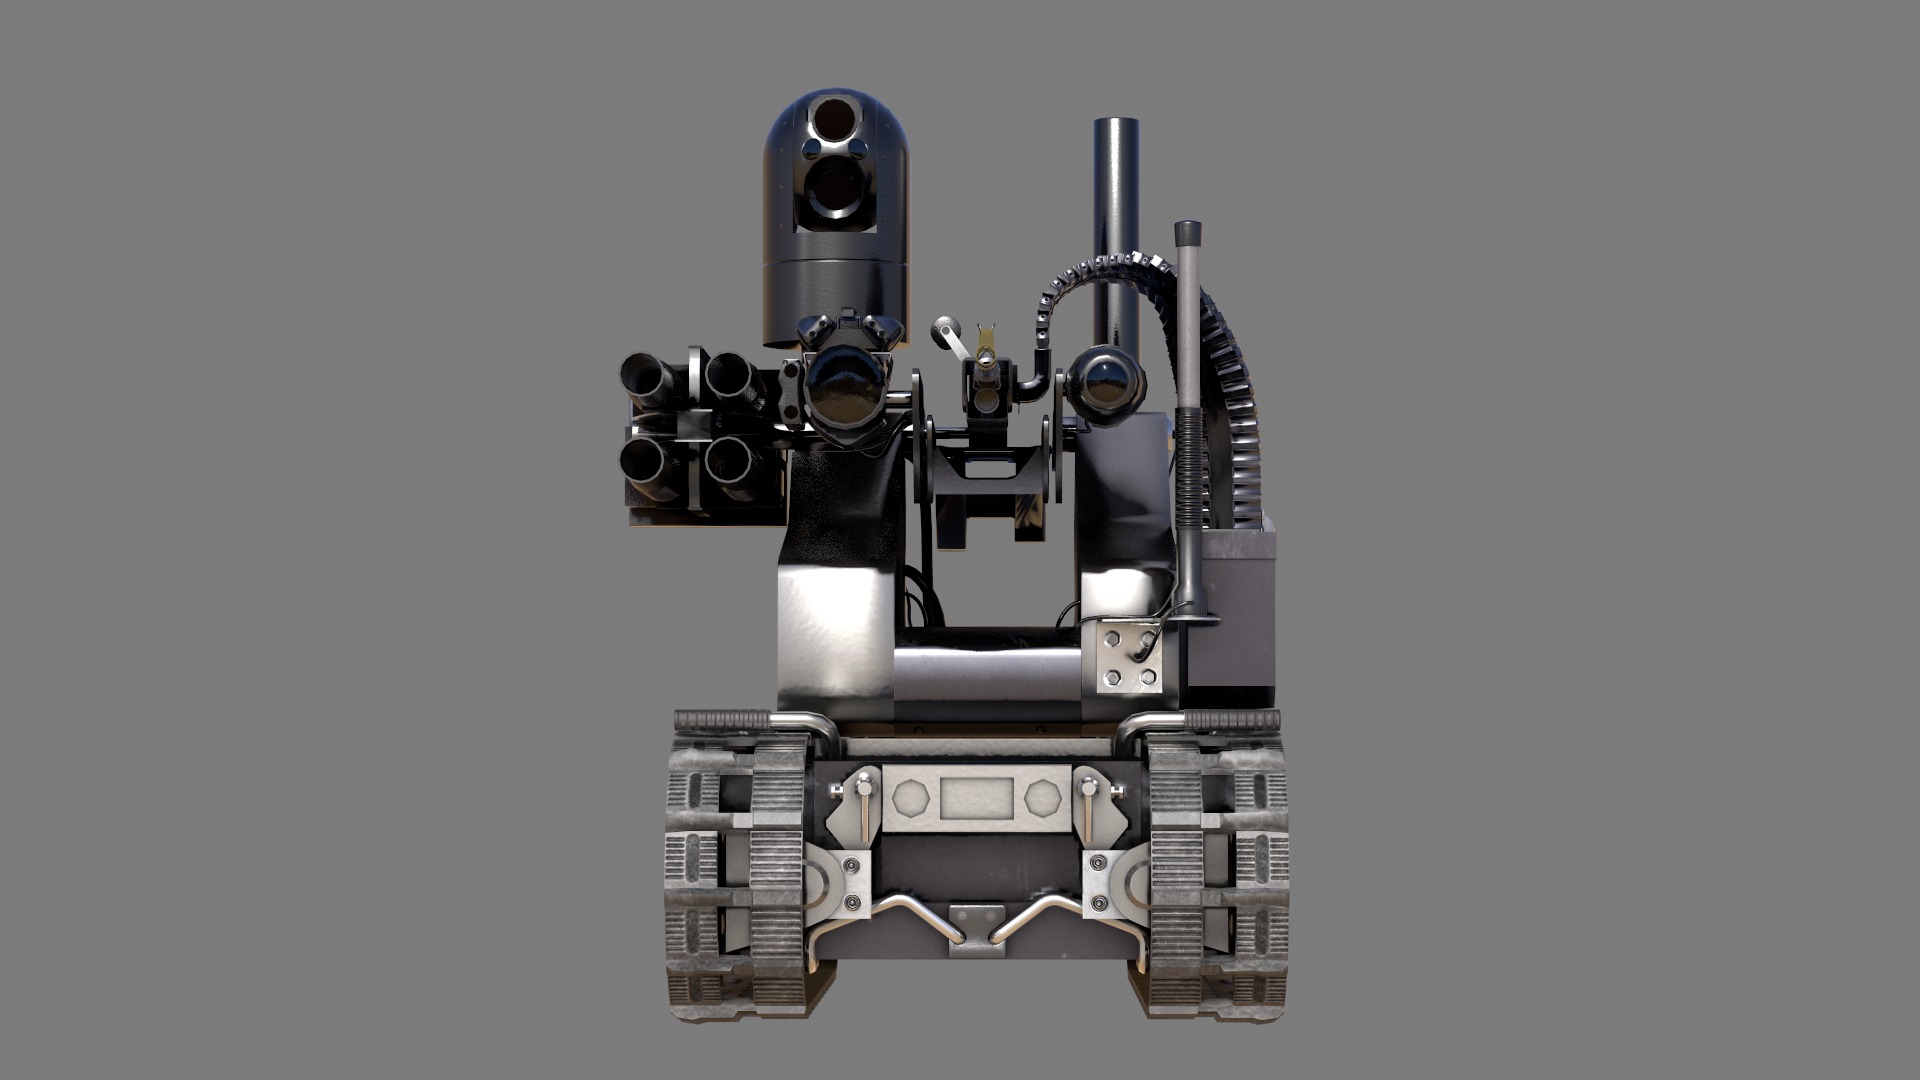 3D maars robotic combat model https://p.turbosquid.com/ts-thumb/N7/aiK7EK/uVrLy5up/00/png/1567340983/1920x1080/turn_fit_q99/0de5c39ae6a755ac9c45eb0a77ee30bdfb0dd6a7/00-1.jpg